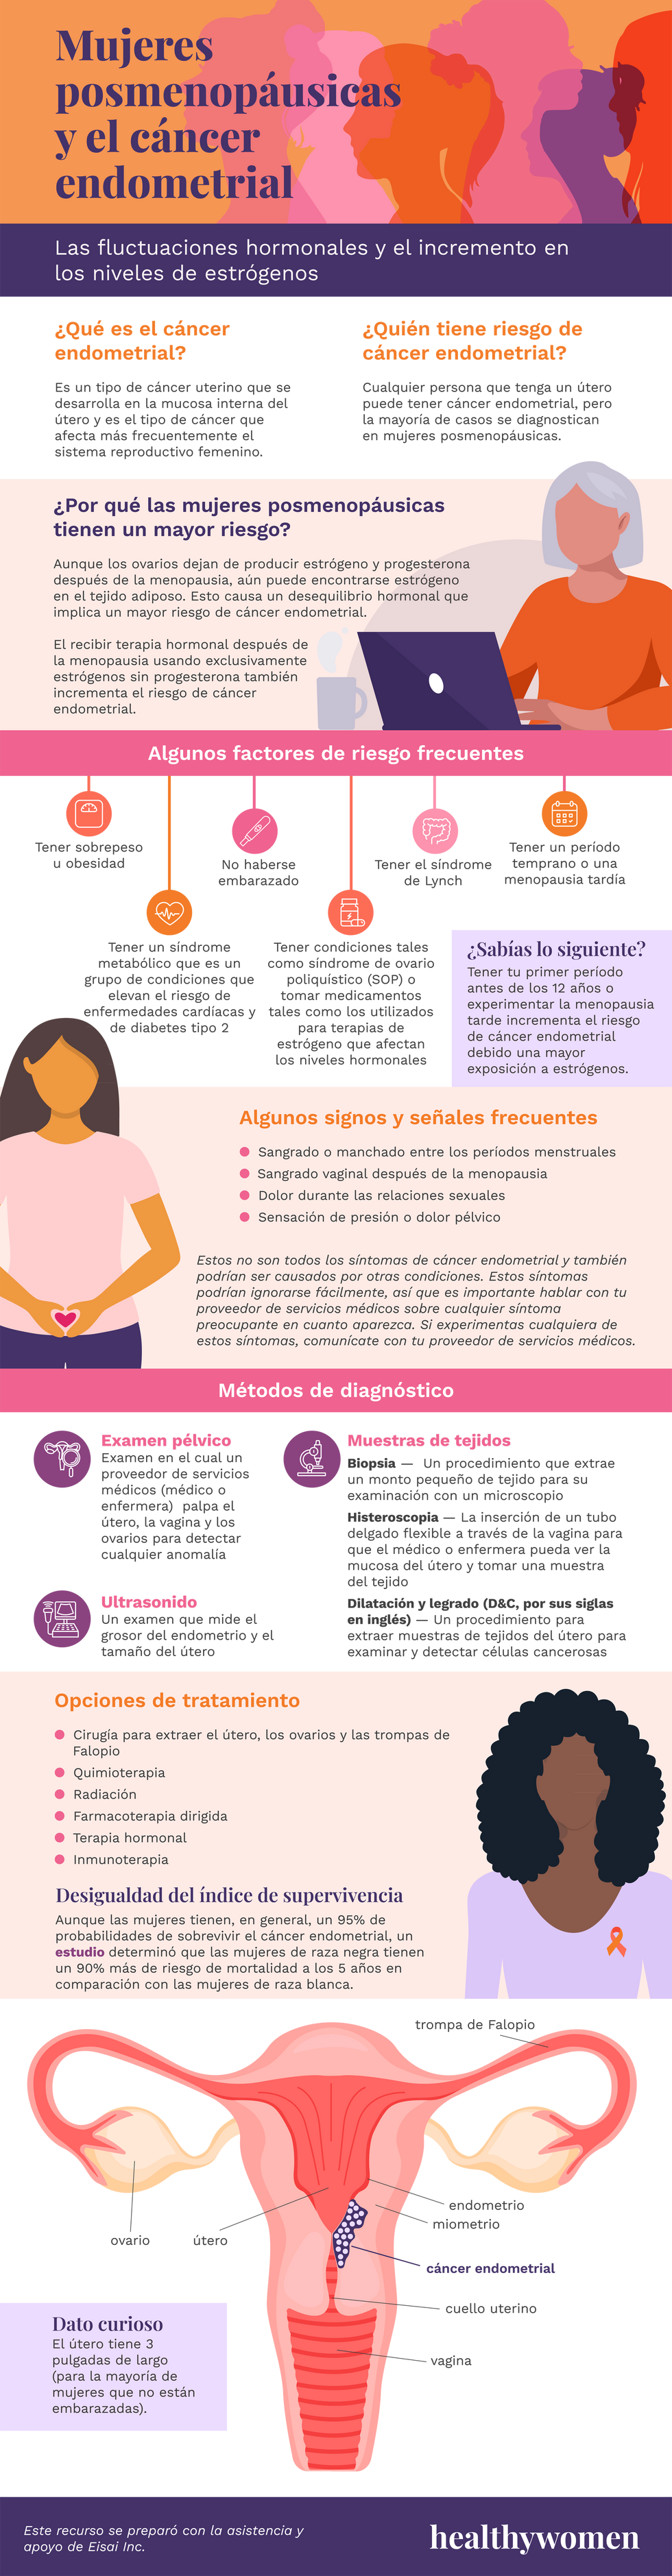 Infographic Mujeres posmenopu00e1usicas y el cu00e1ncer endometrial. Click the image to open the PDF